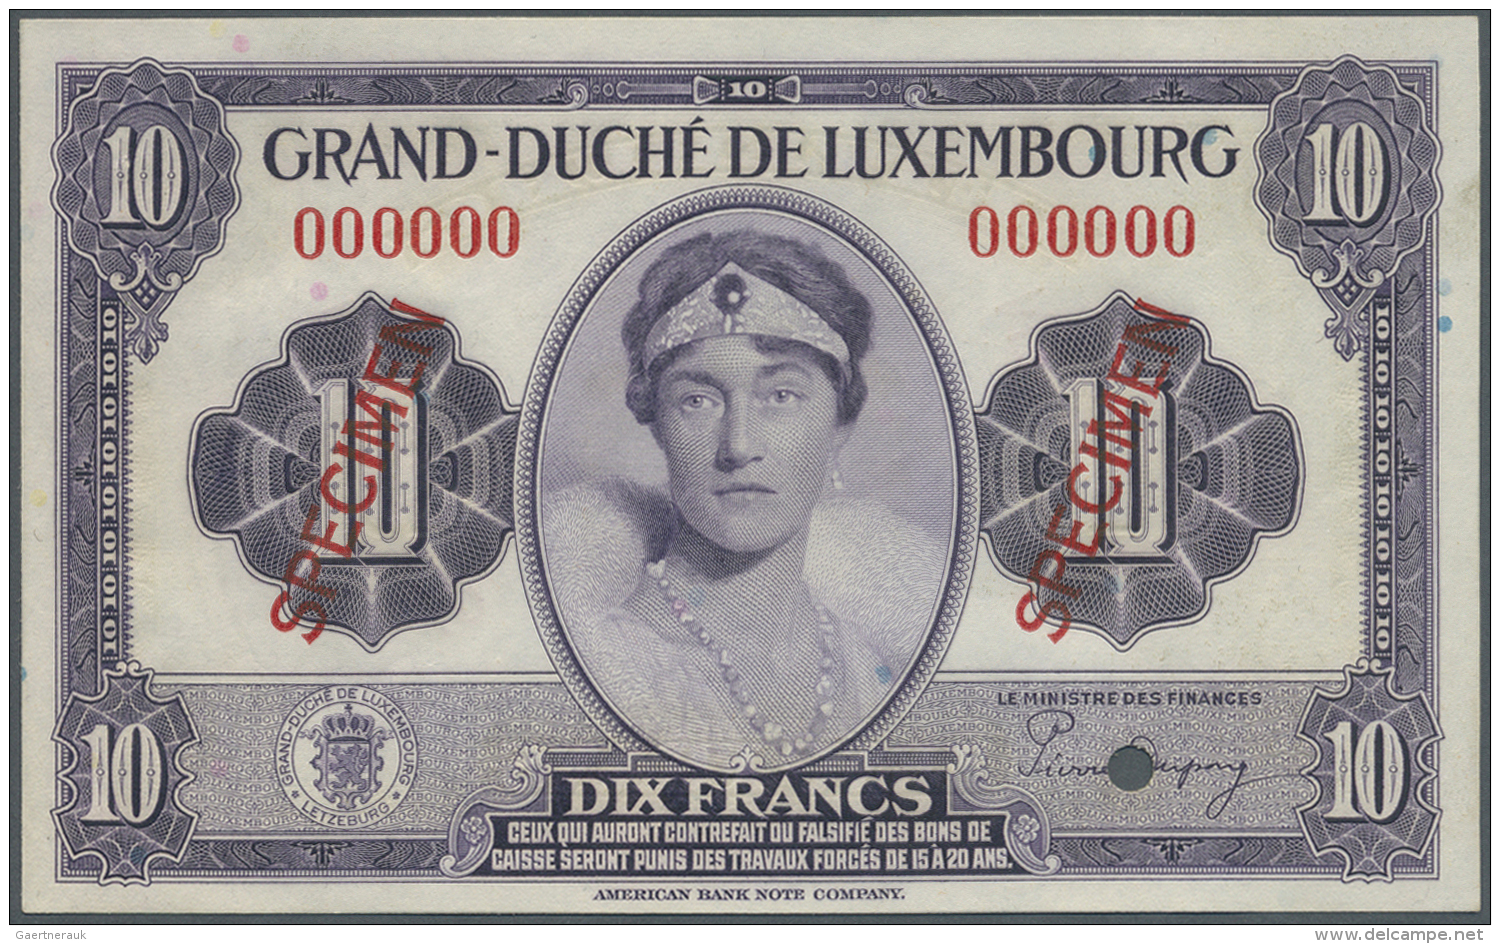 Luxembourg: 10 Francs 1944 Specimen P. 44s, Zero Serial Numbers, Cancellation Hole, Specimen Overprint, One Vertical Ben - Luxembourg